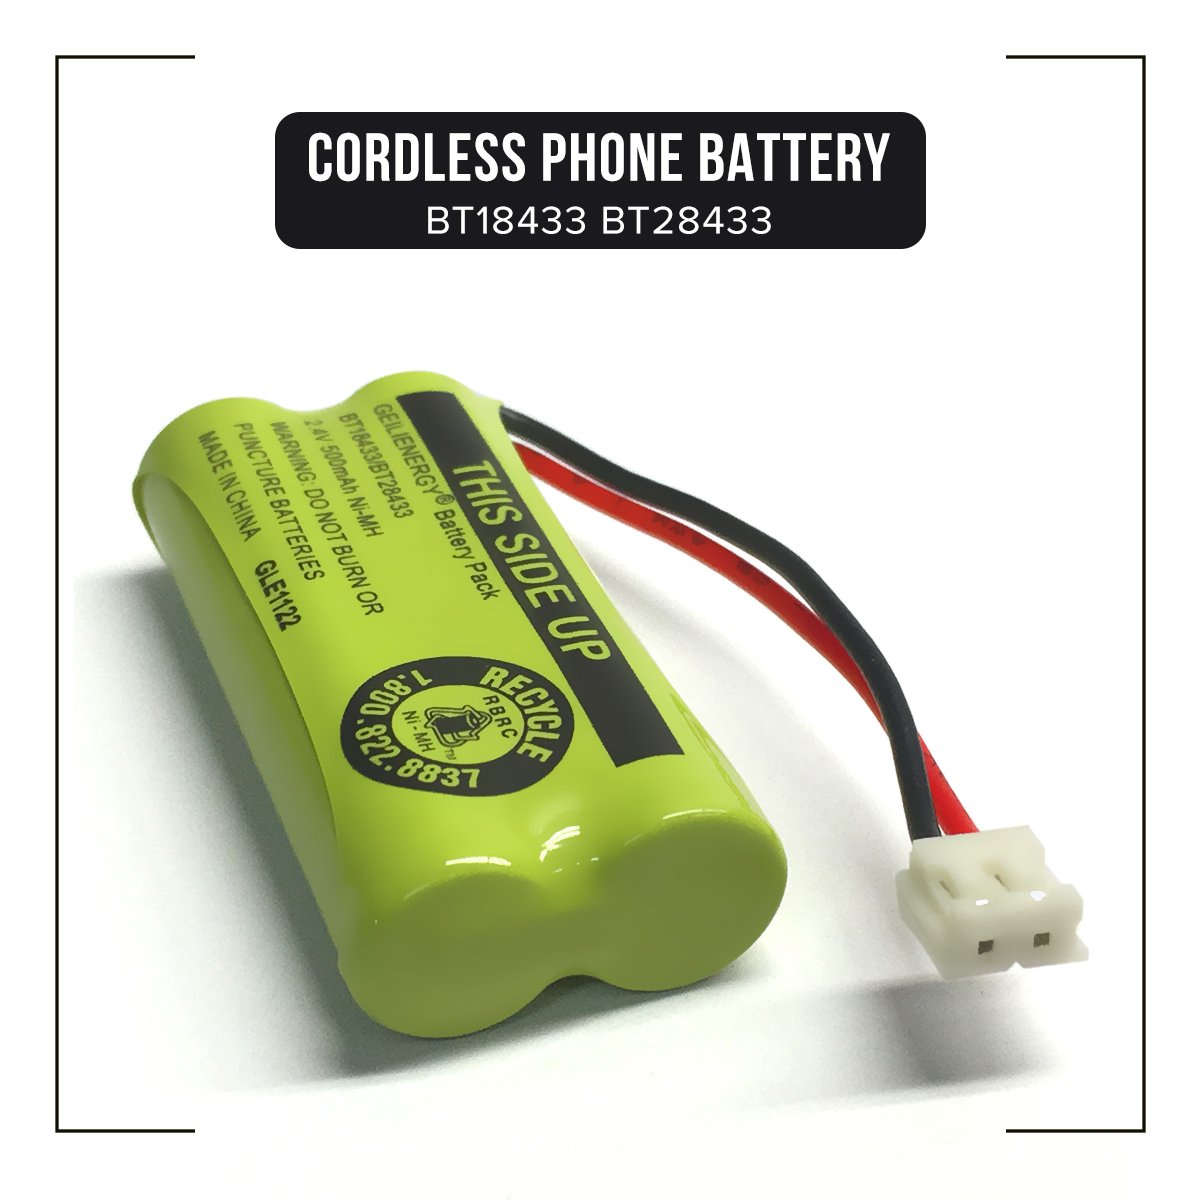 AT&T  BT28433 Cordless Phone Battery